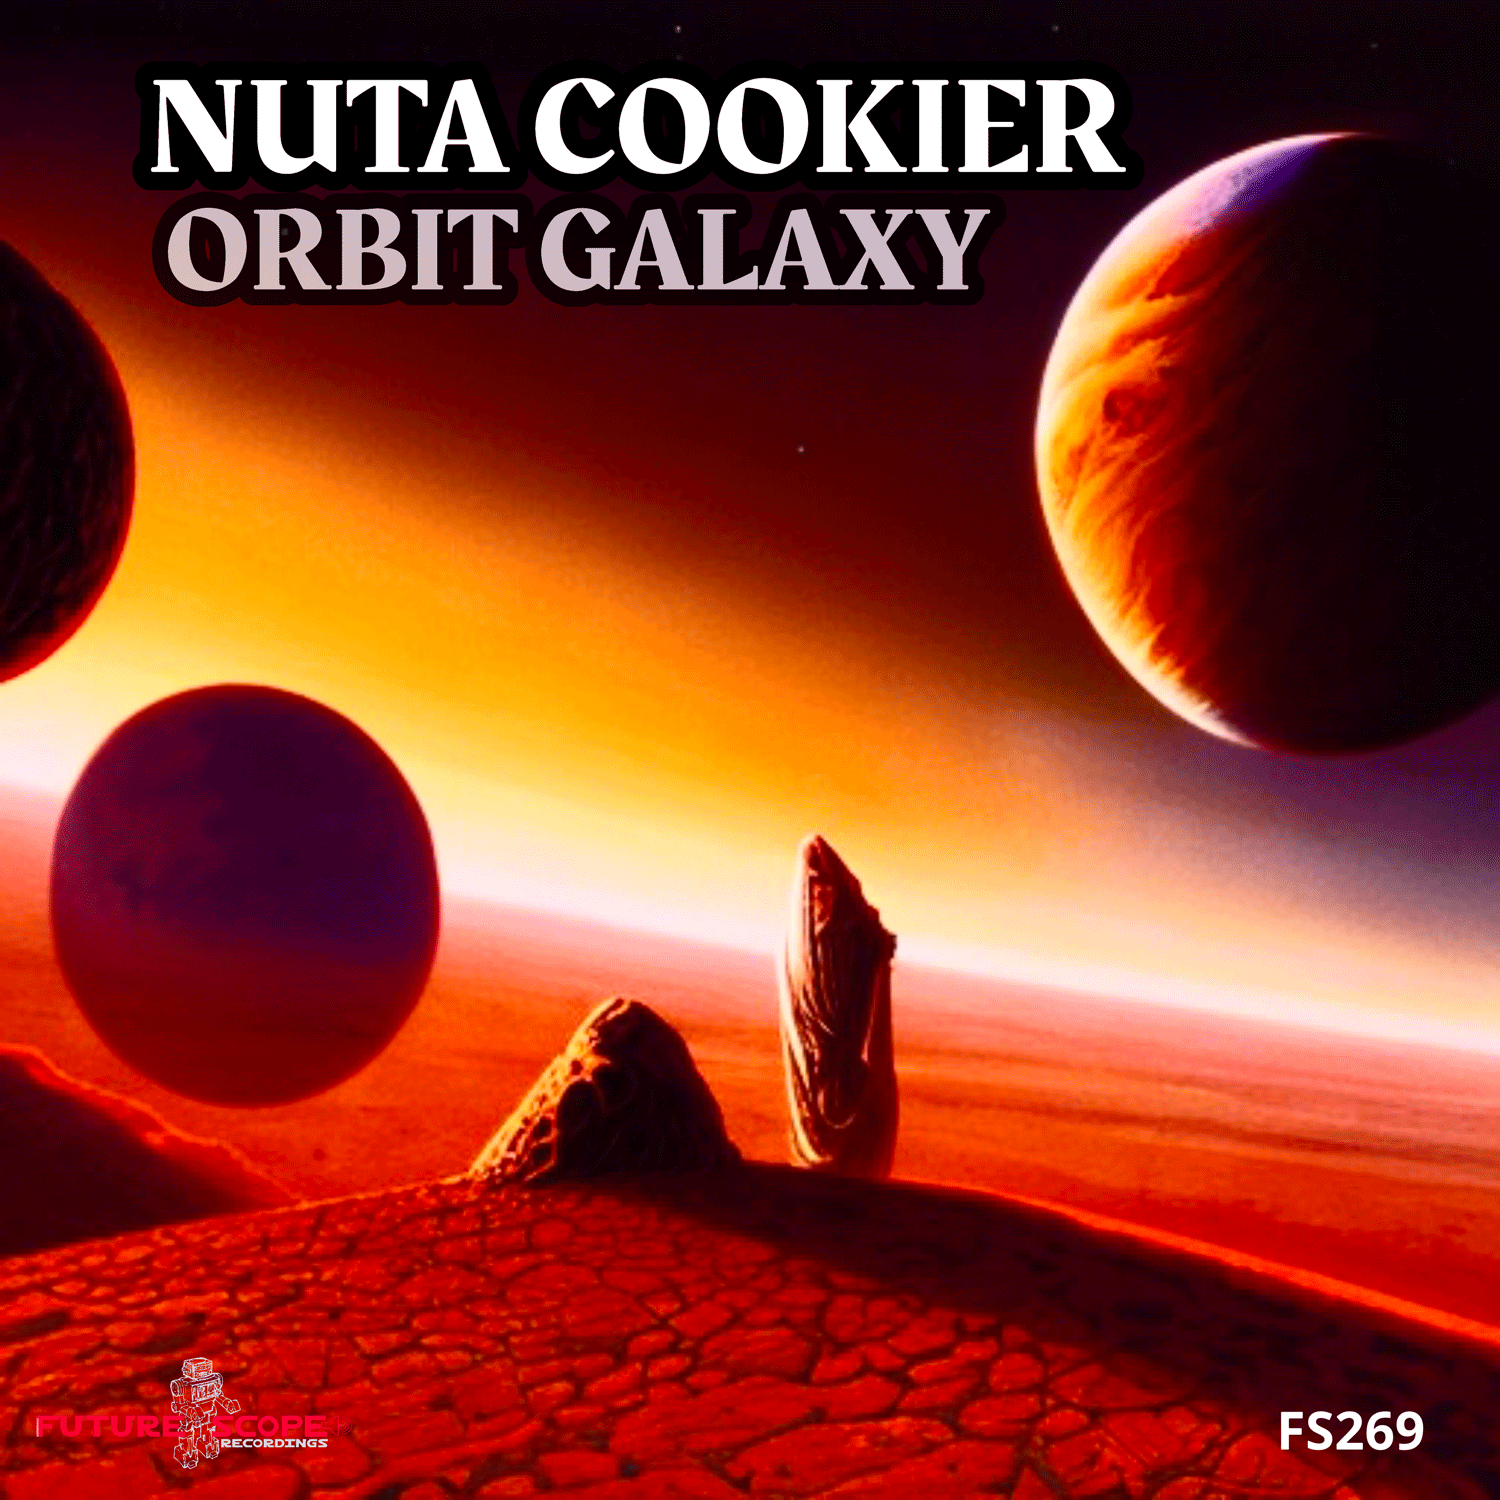 Sao Paulo-based artist Nuta Cookier presents “Orbit Galaxy”